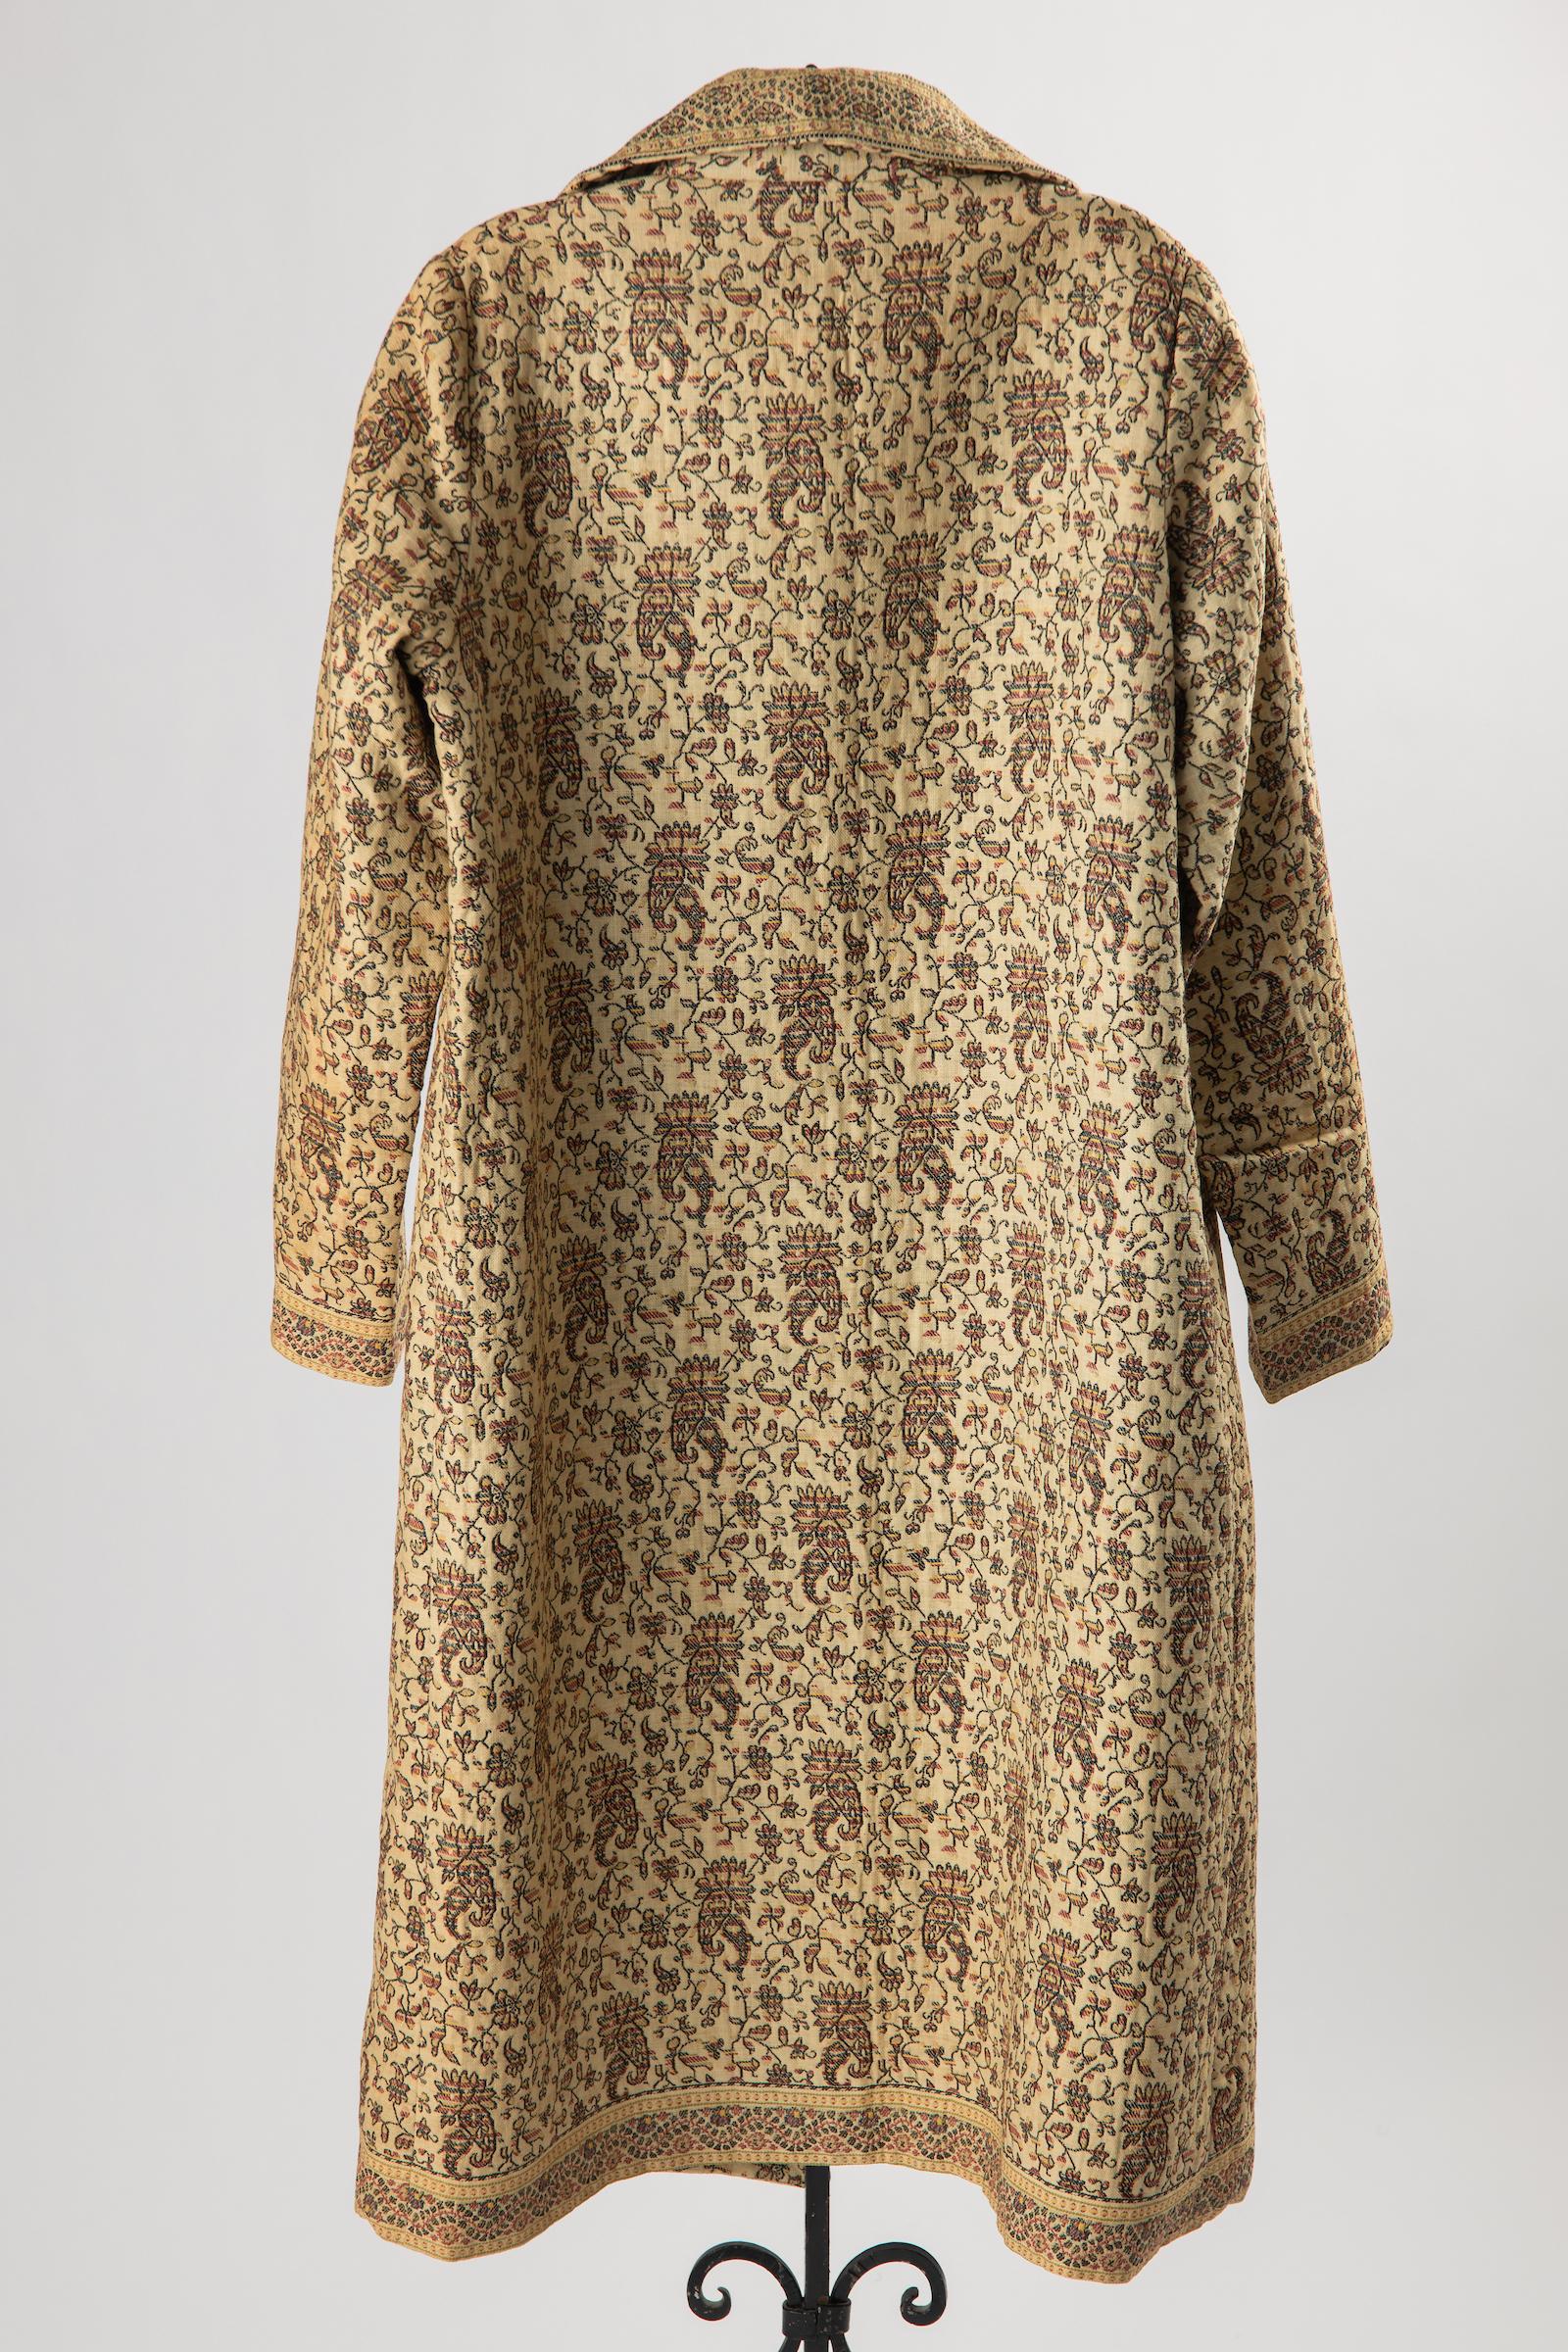 Handgewebter handgewebter Couture-Mantel aus Paisley-Brokat, echtes osmanisches ägyptisches Couture-Art déco im Angebot 6